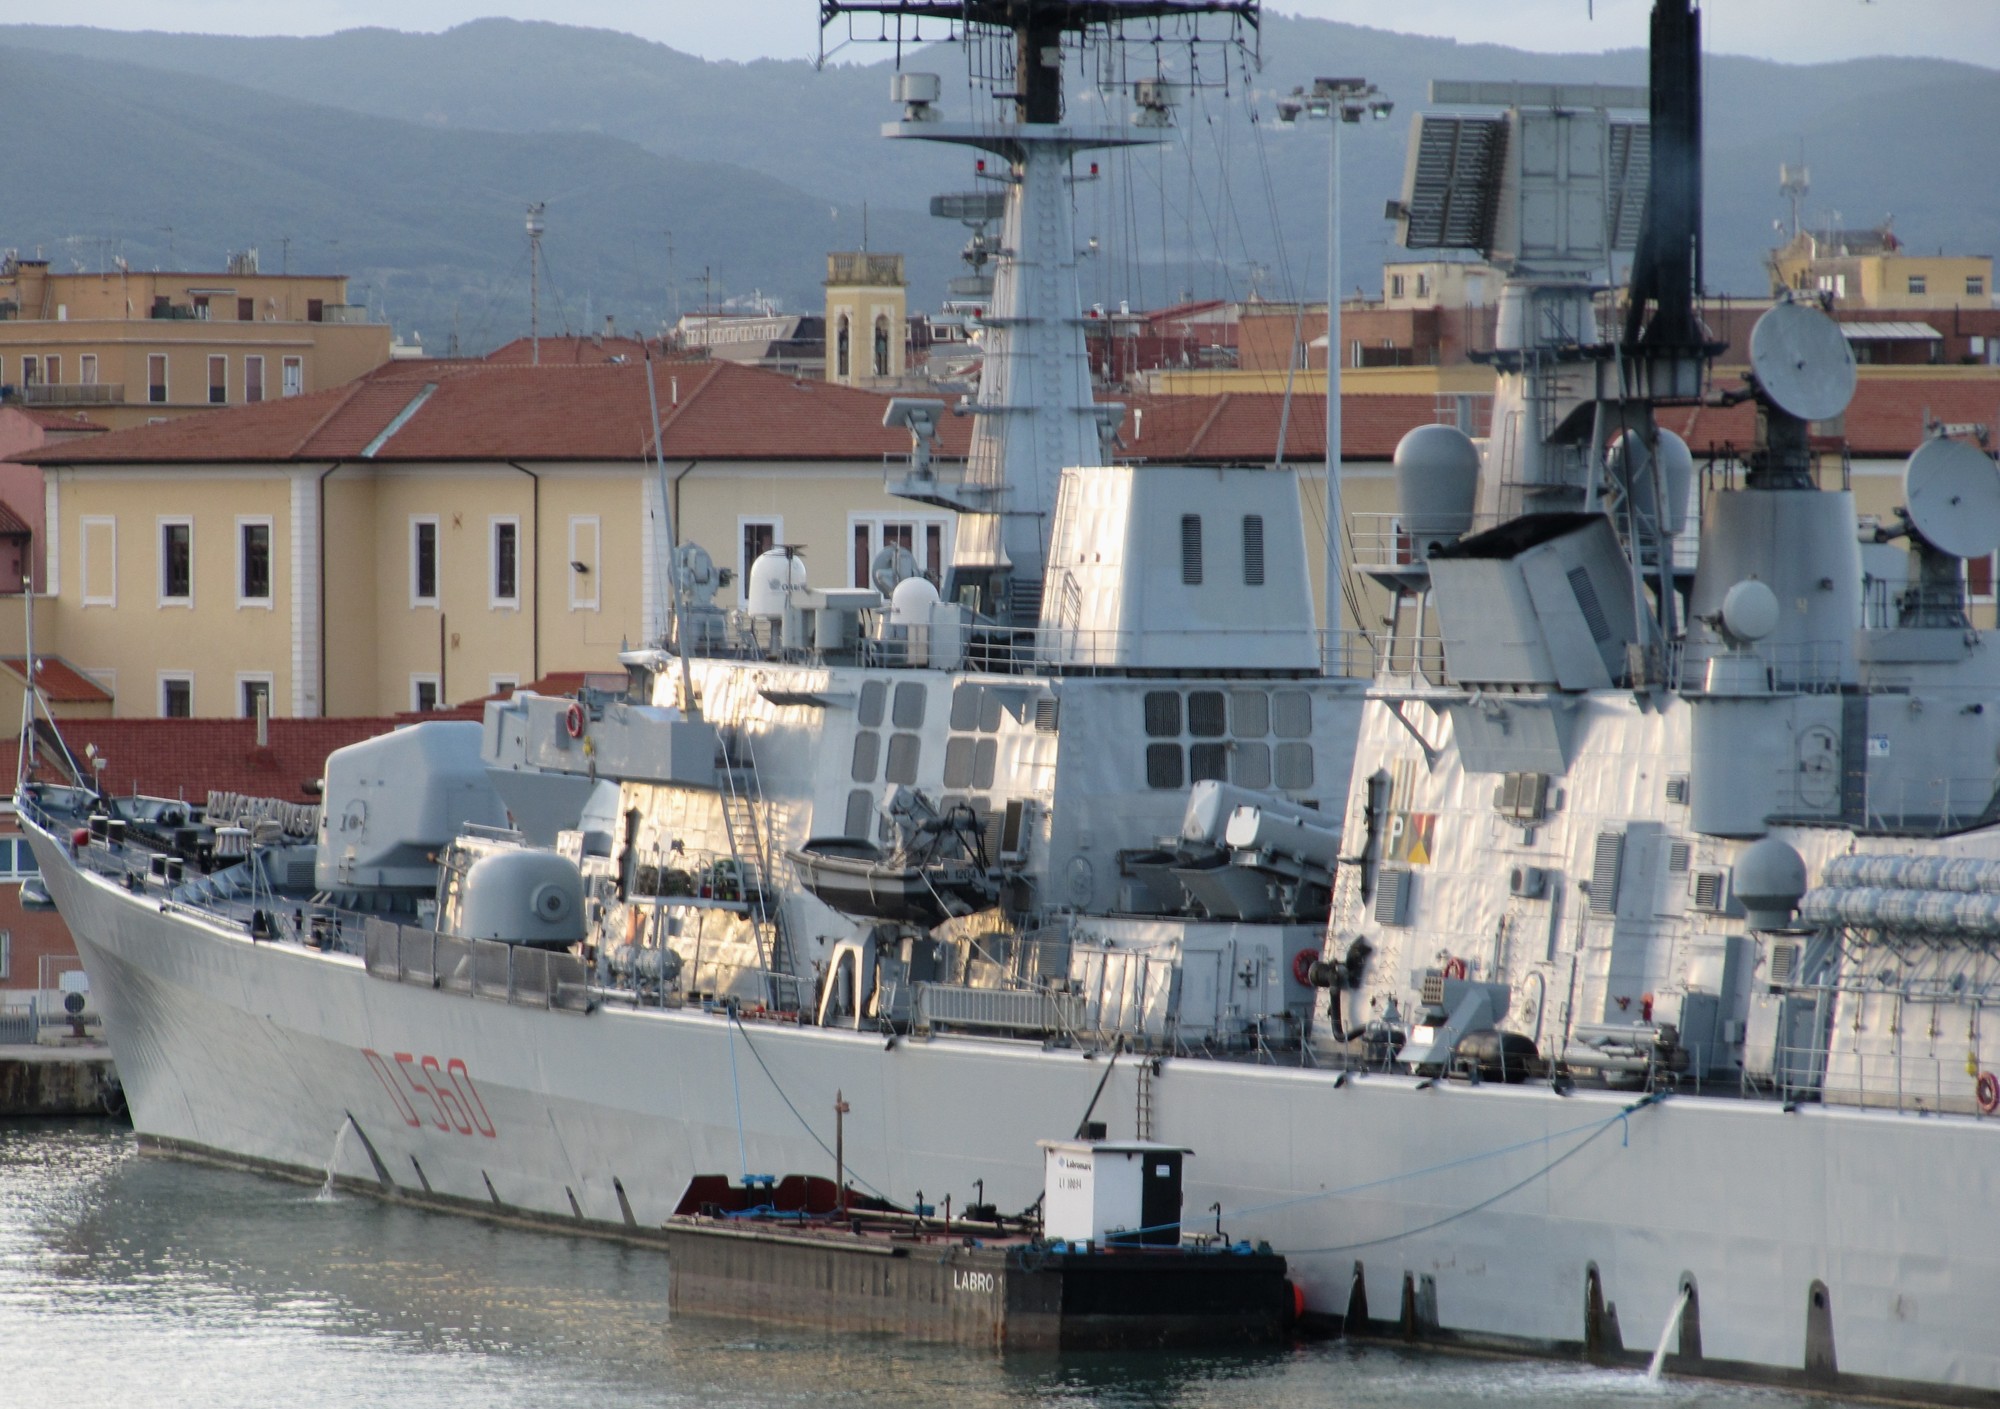 d-560 luigi durand de la penne its nave guided missile destroyer ddg italian navy marina militare 67